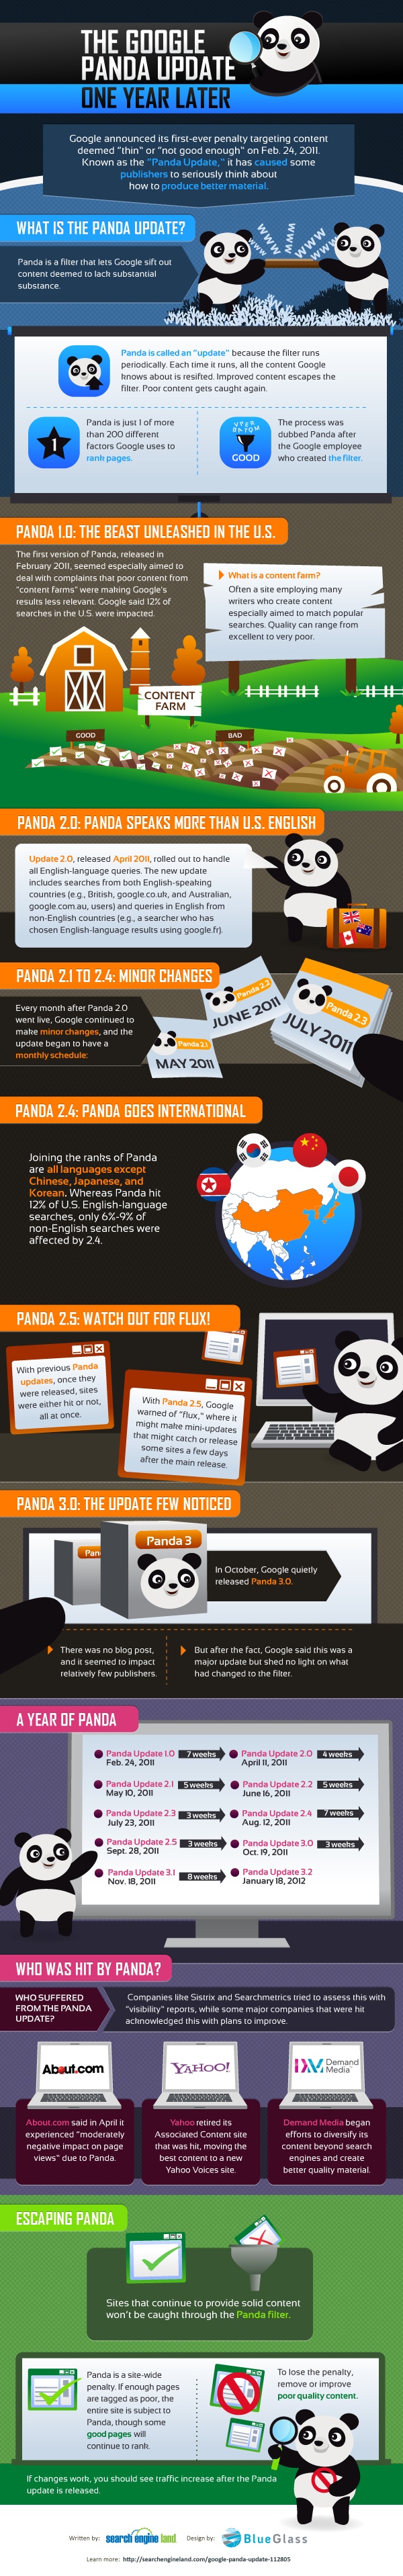 google panda 1 year later resized 600